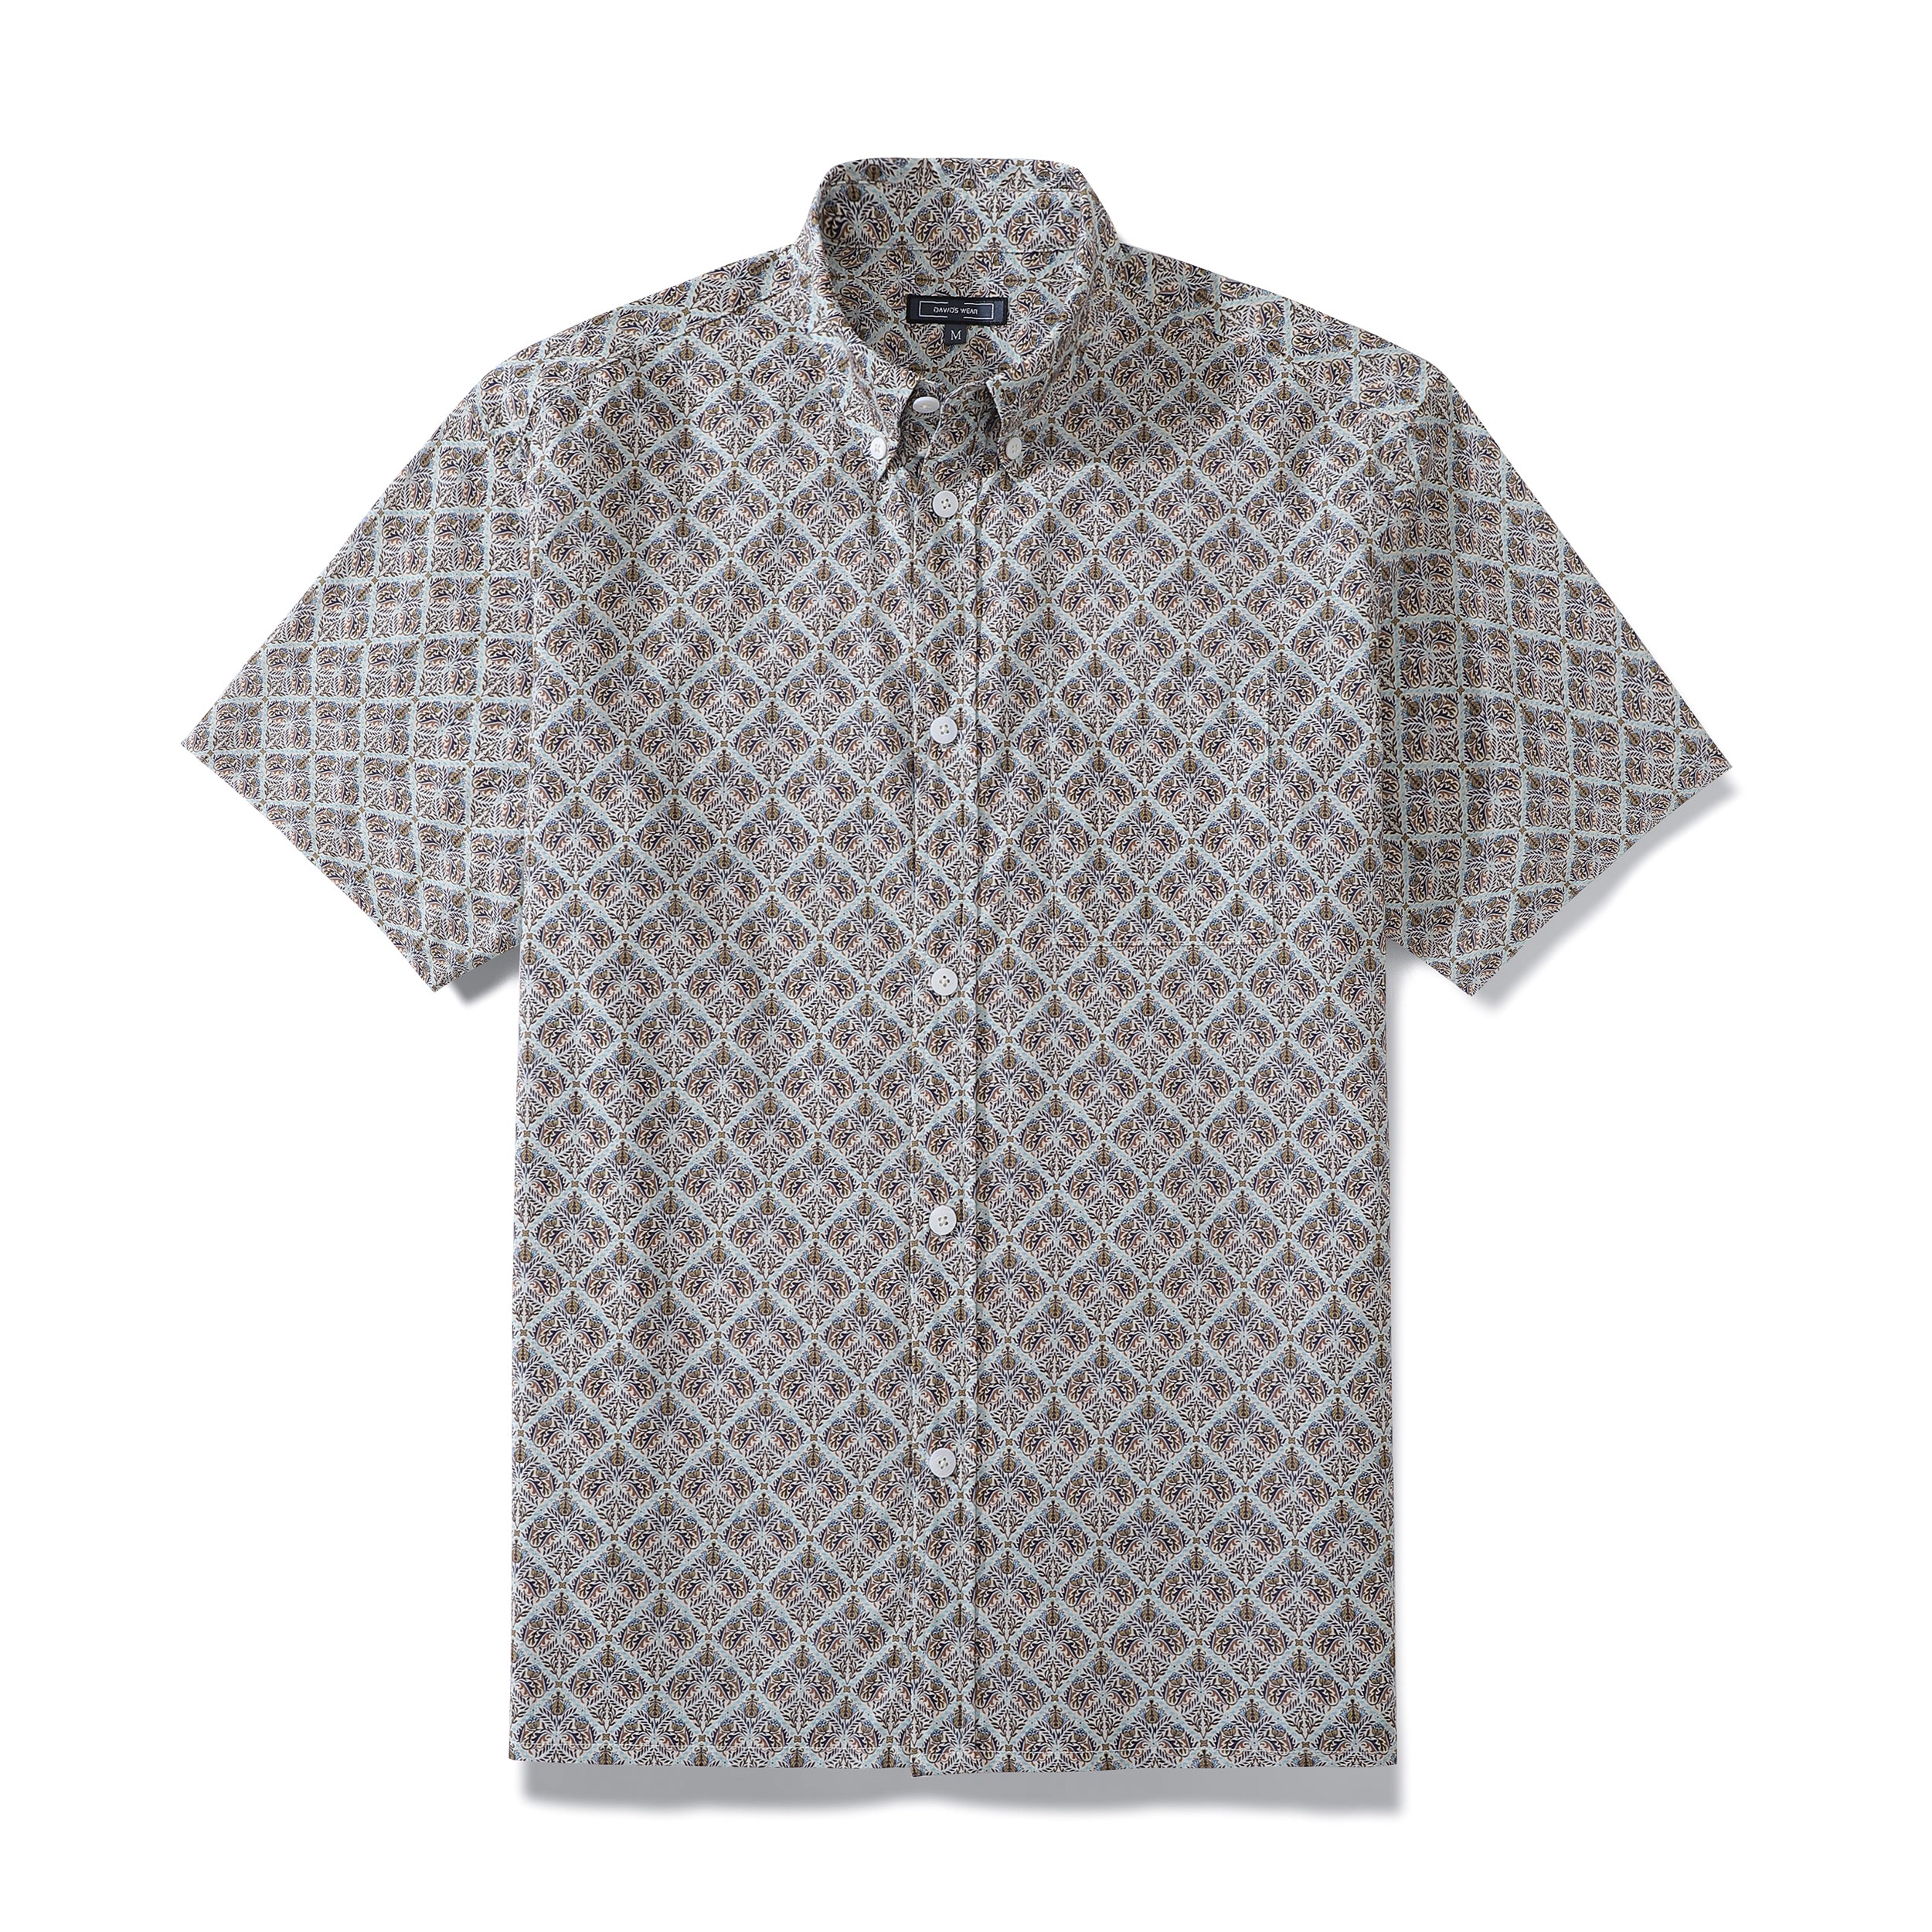 Men's Aloha Shirt Gray Diamond Pattern Cotton Short Sleeve Button Down